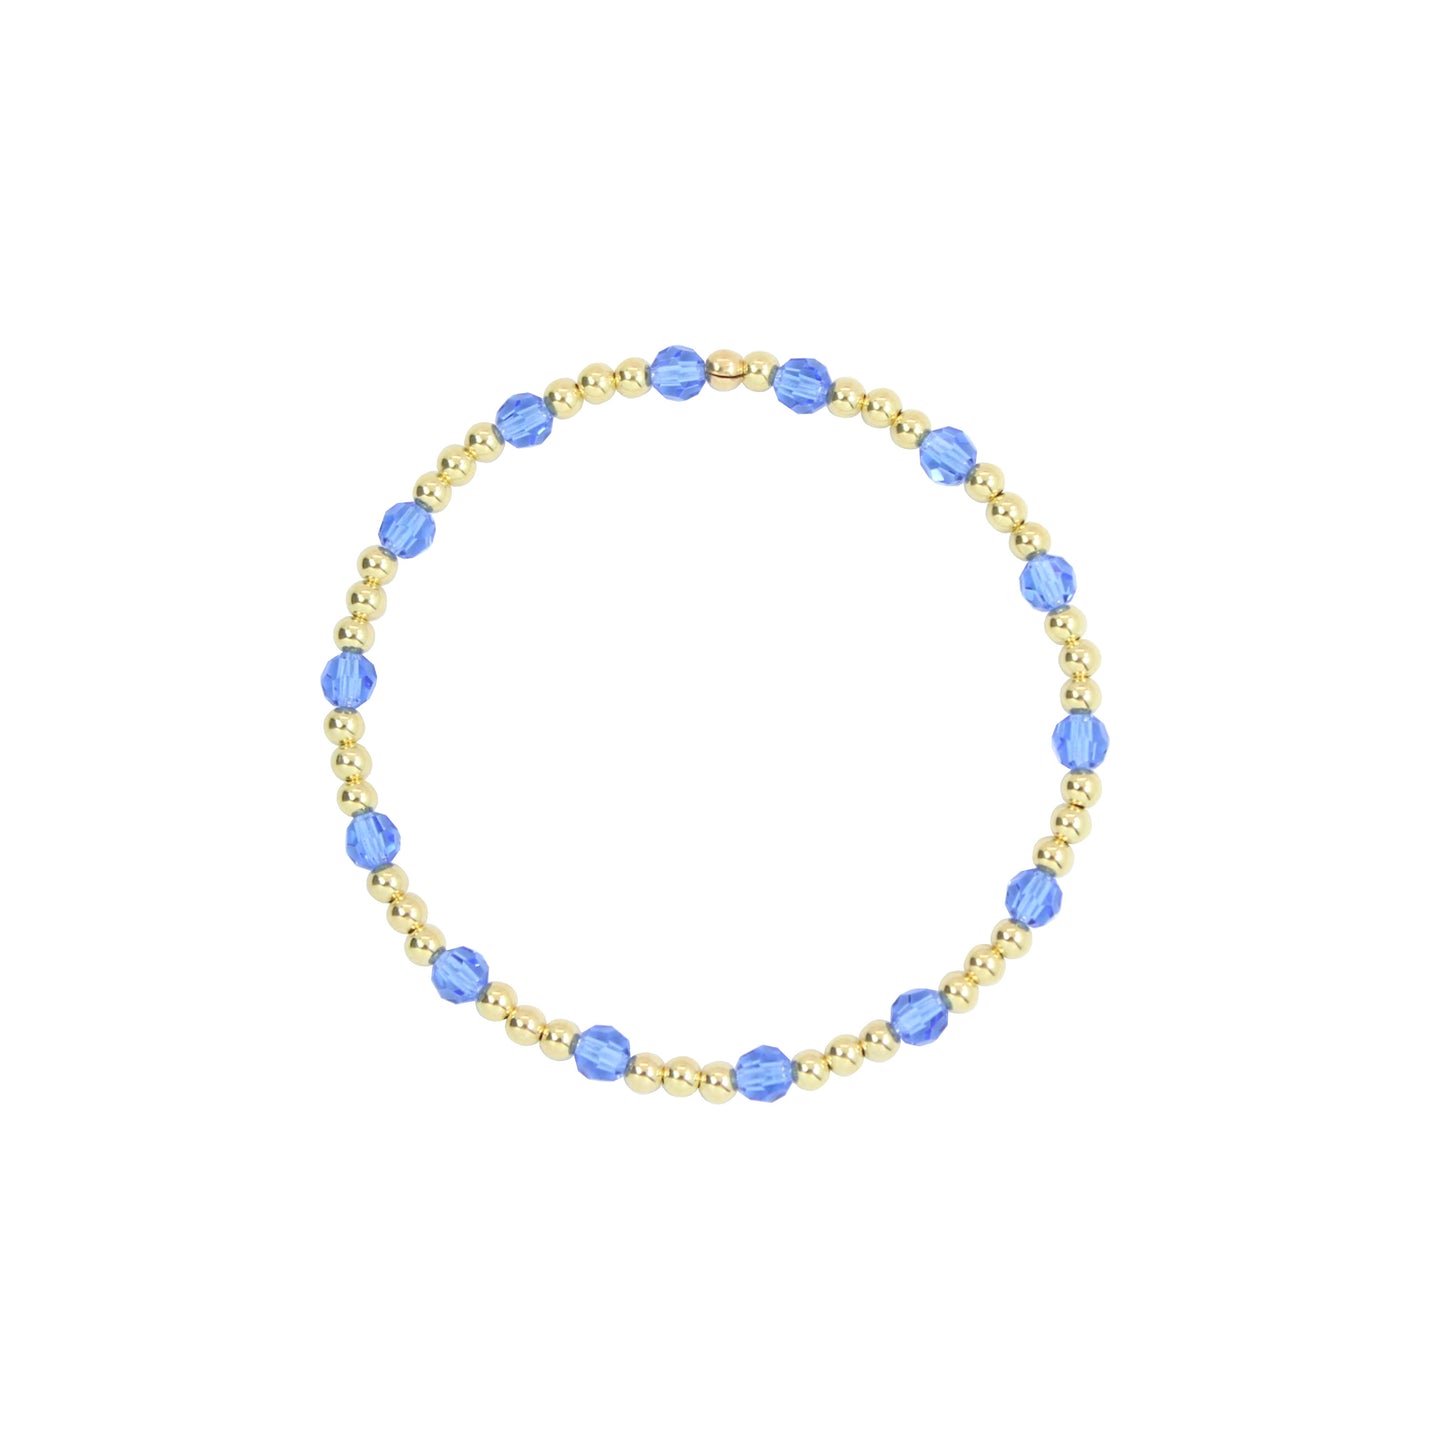 Stretchy September Birthstone Adult Dotted Bracelet (3MM + 4MM beads)